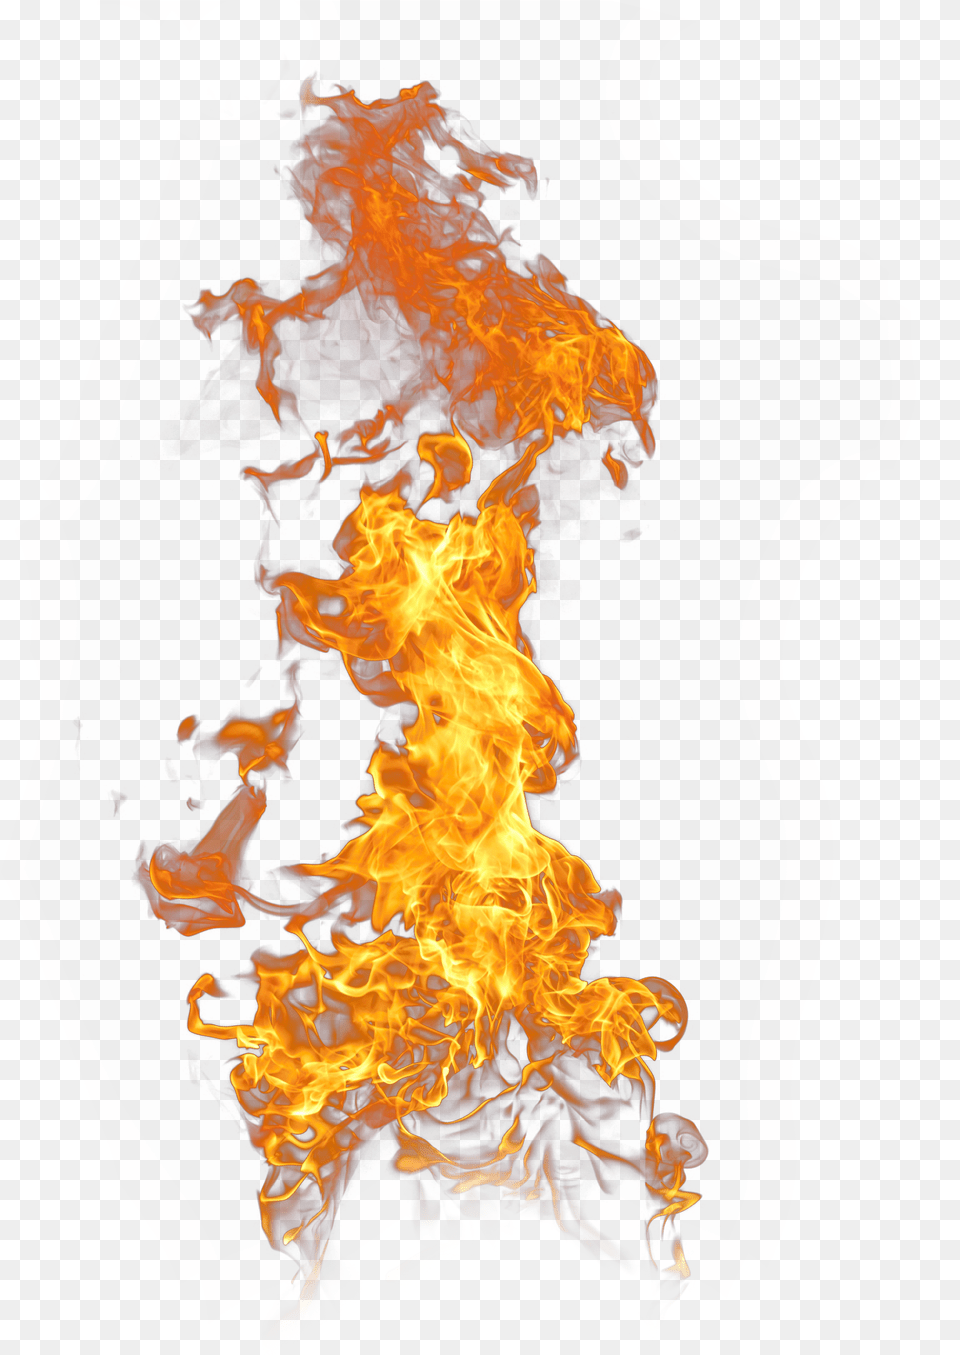 Download Flame Effect Clipart Hd Fire Effect Hd, Bonfire Png Image